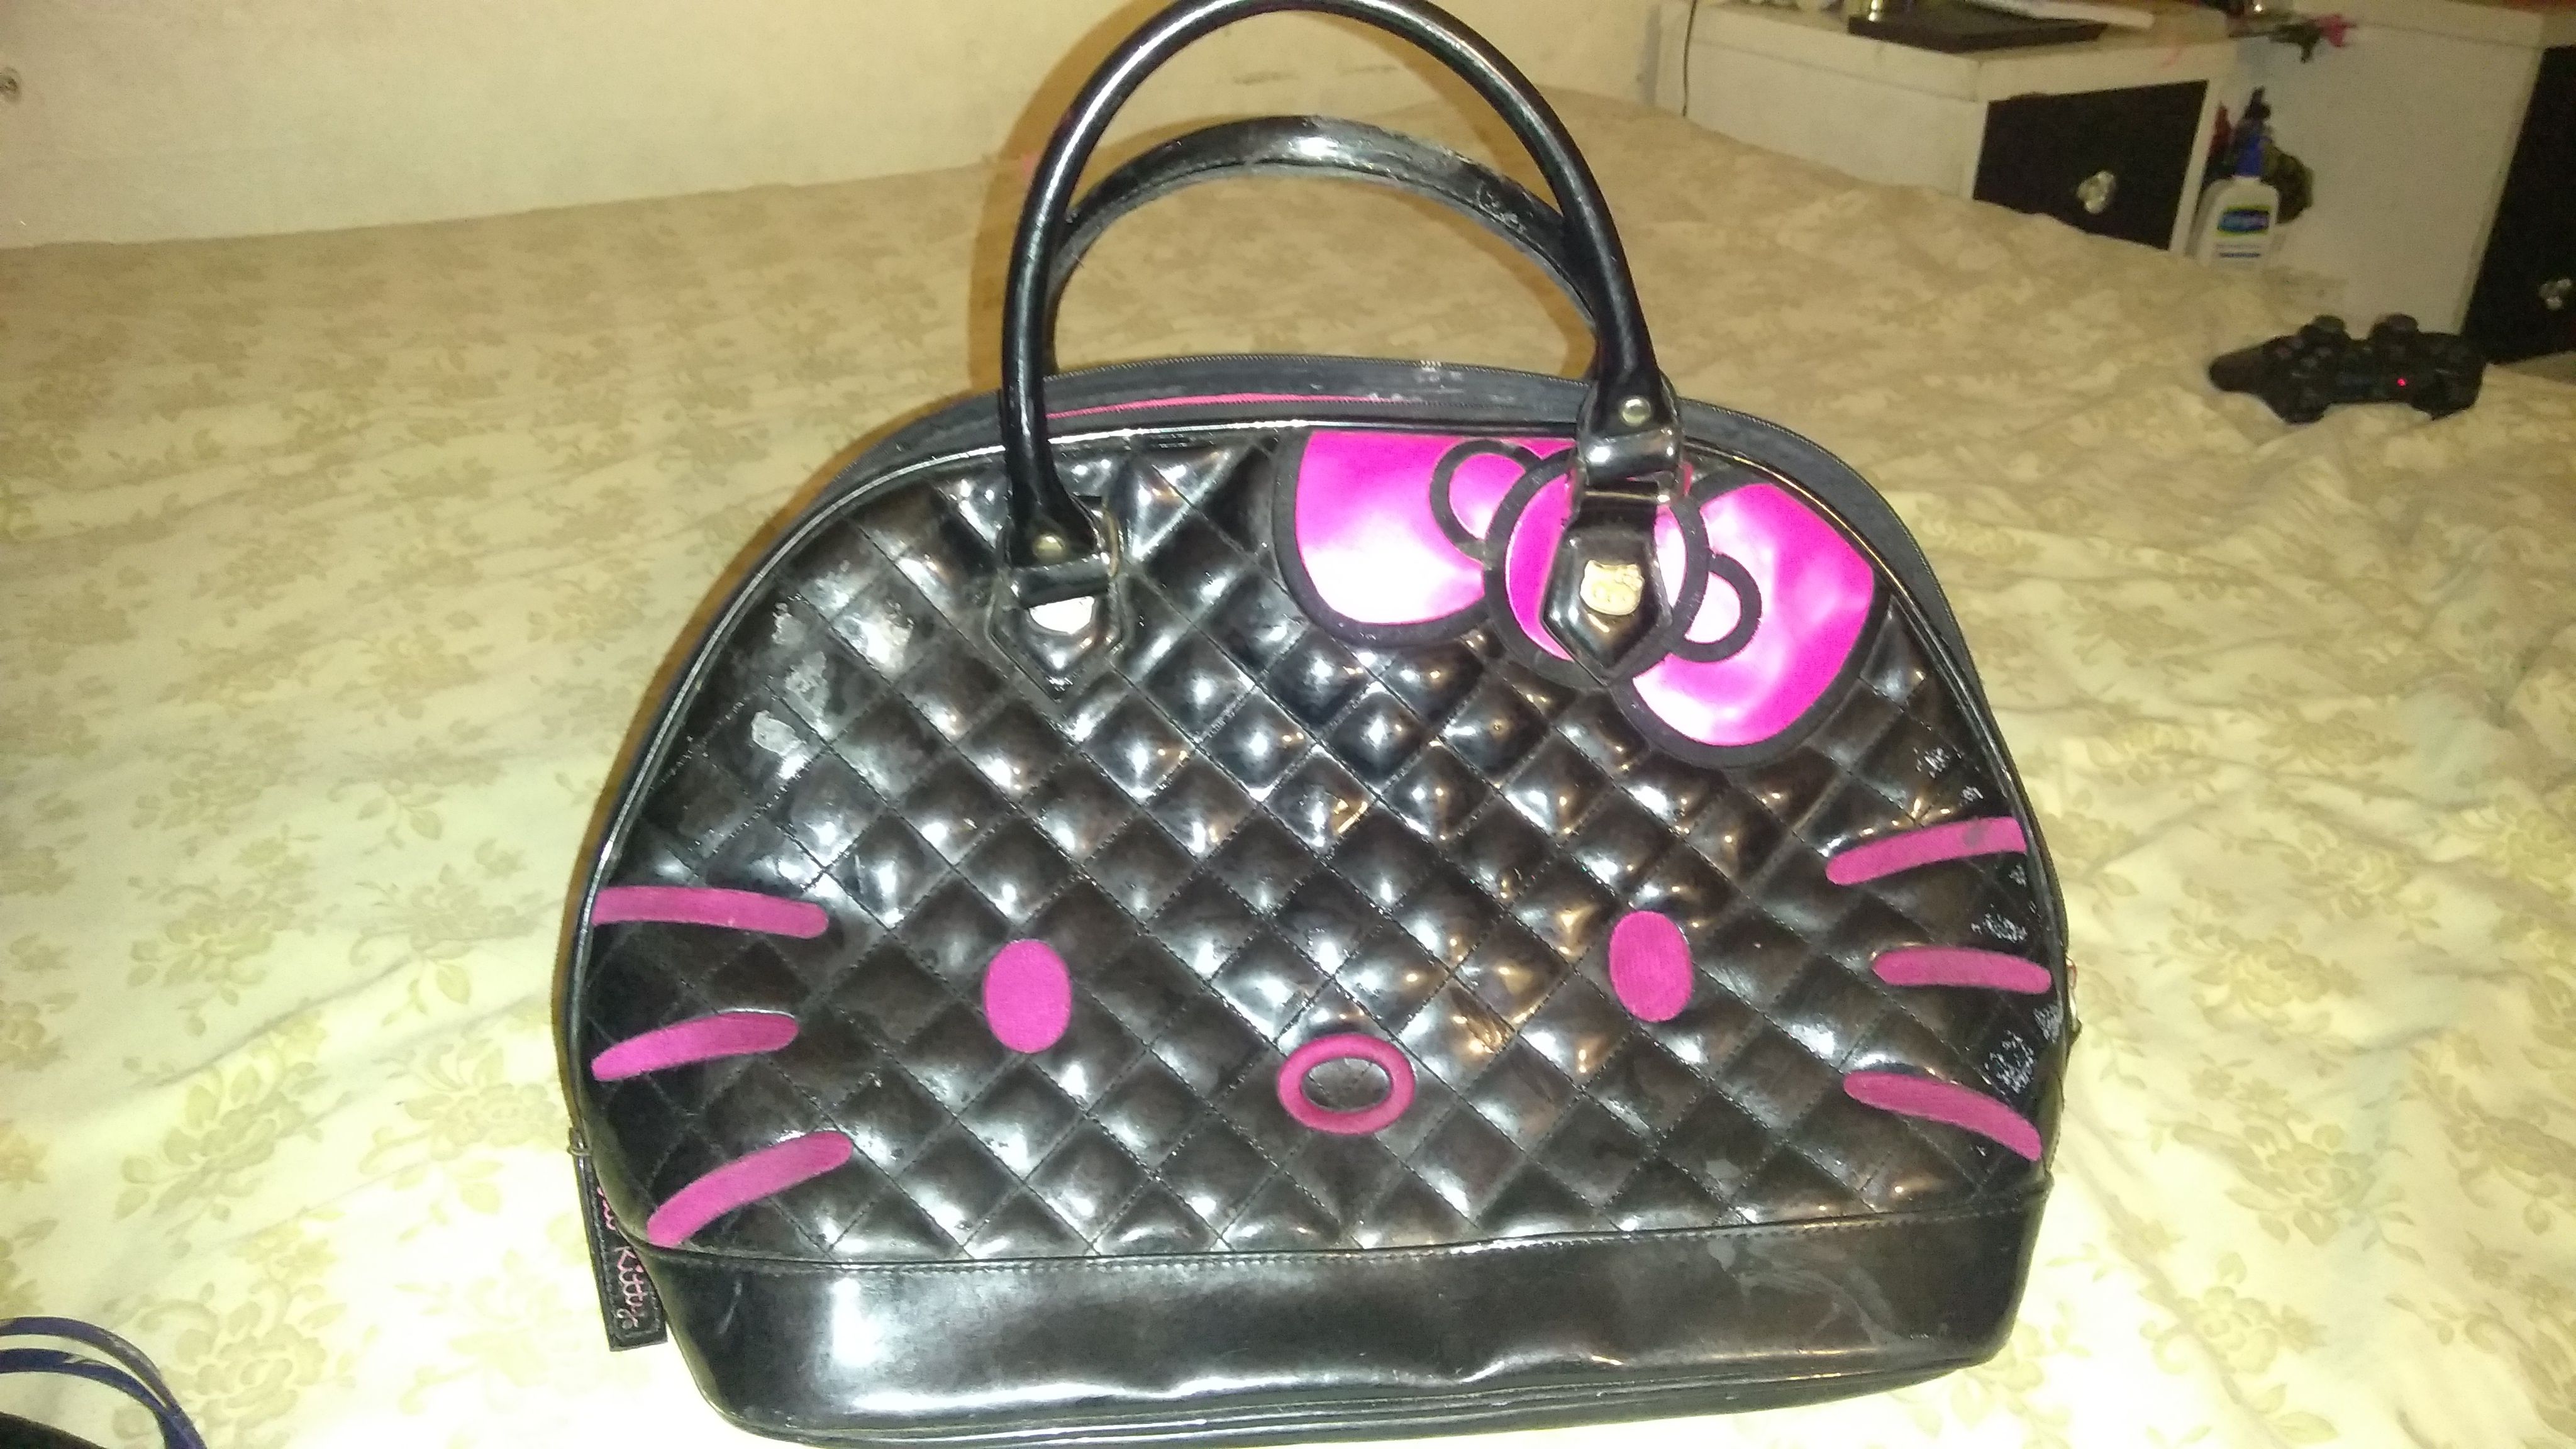 Big purse brand Hello Kitty